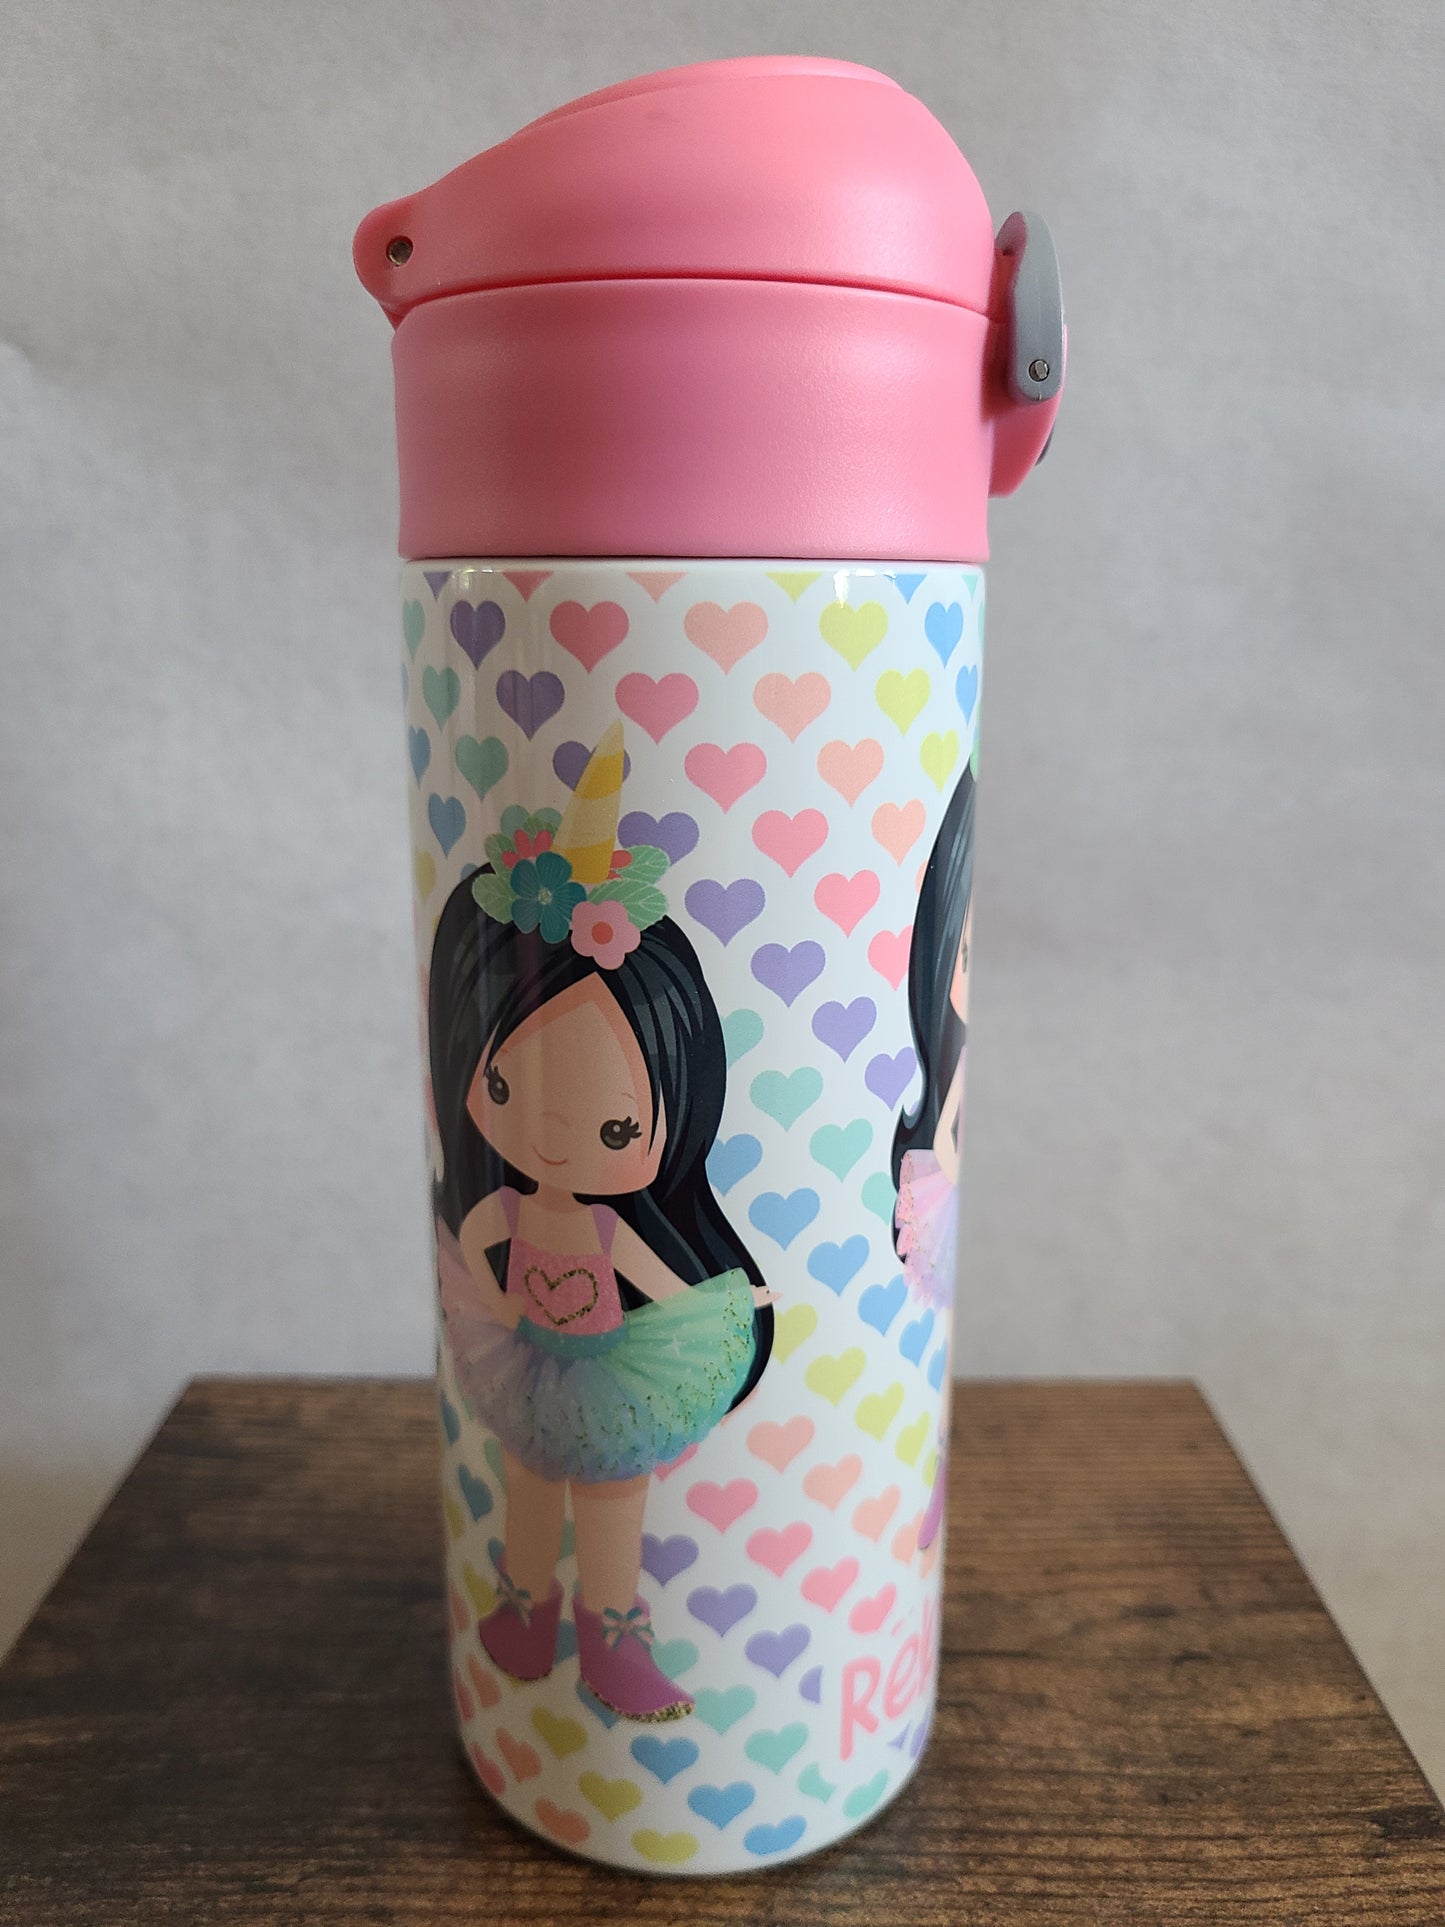 Rainbow Tutu Unicorn Girl Water Bottle - 12 oz Flip Top Water Bottle with Straw